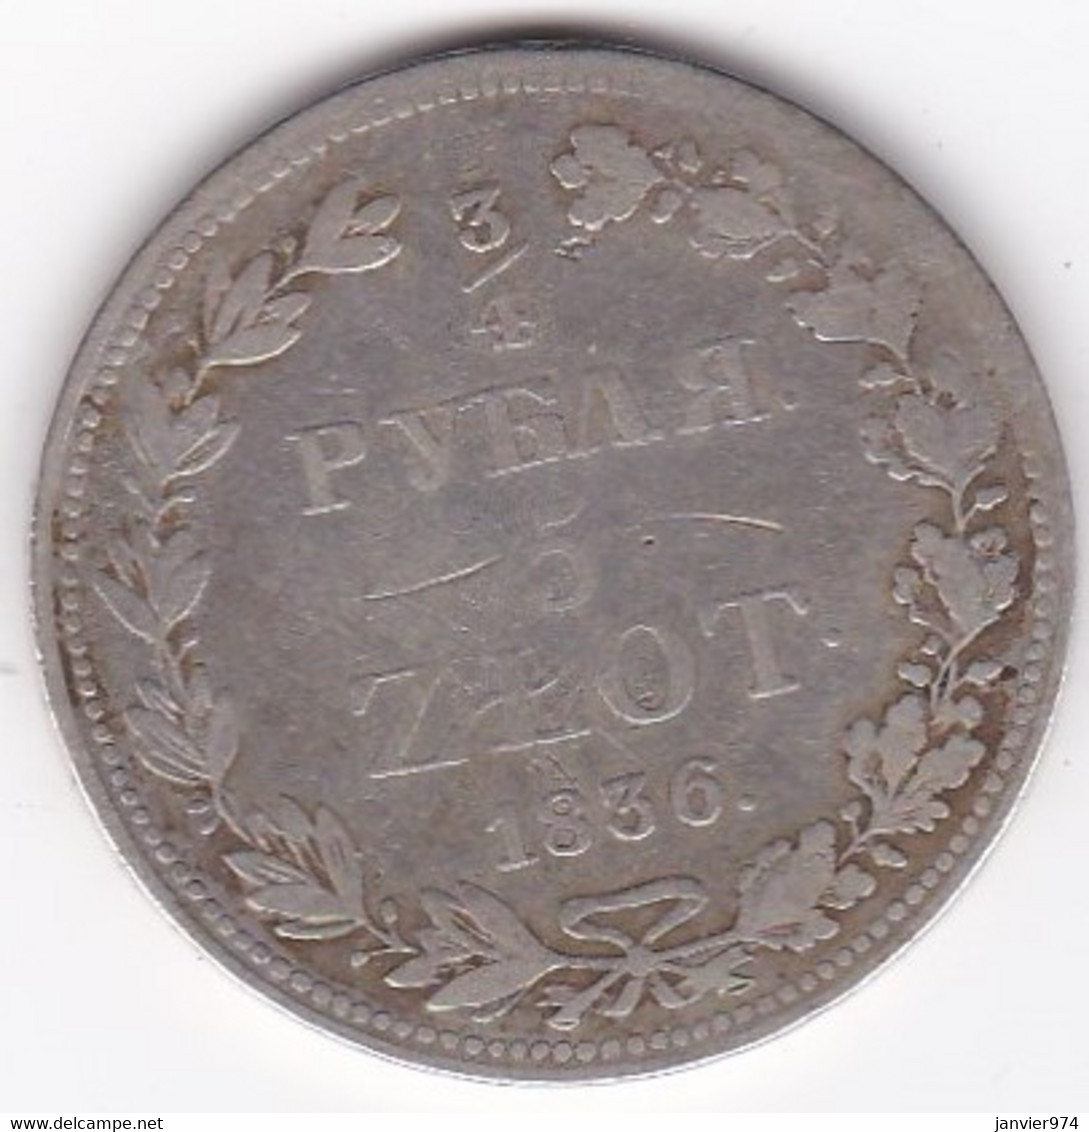 Pologne 5 Zlotych / 3/4 Rouble 1836 MW. Nicholas I. En Argent. C# 133 - Poland